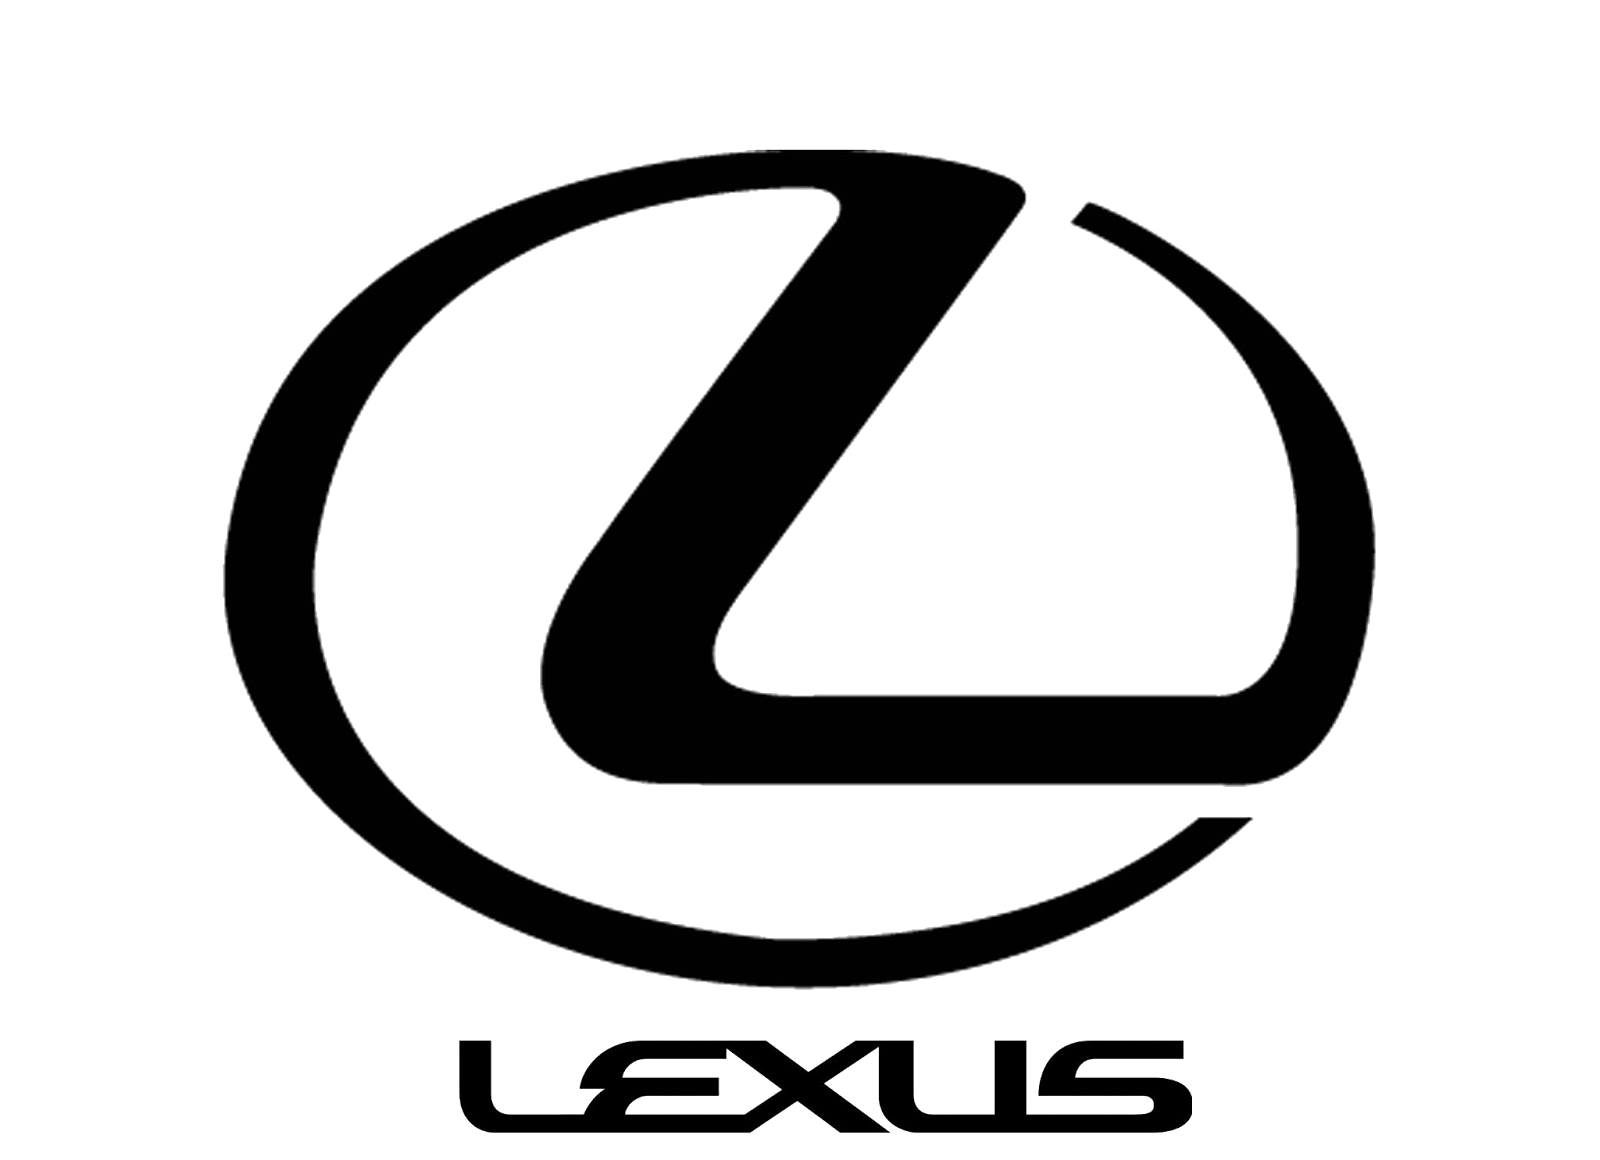 Lexus Logo - Lexus Logo, Lexus Car Symbol Meaning and History | Car Brand Names.com